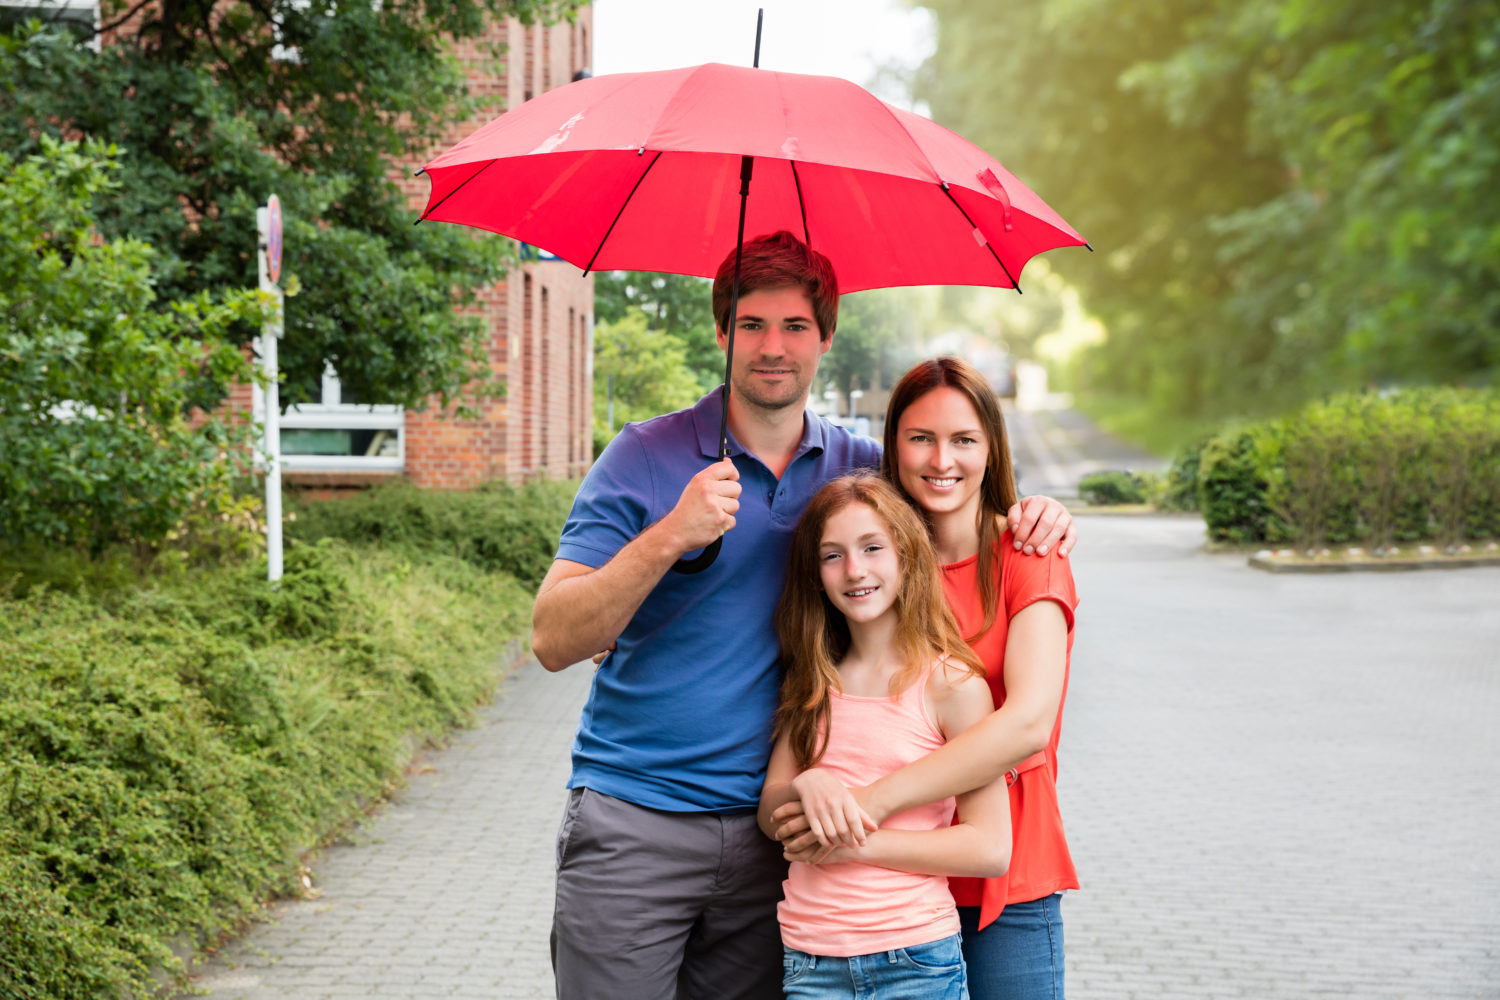 Umbrella insurance coverage | Wade Insurance Agency, Springboro Ohio